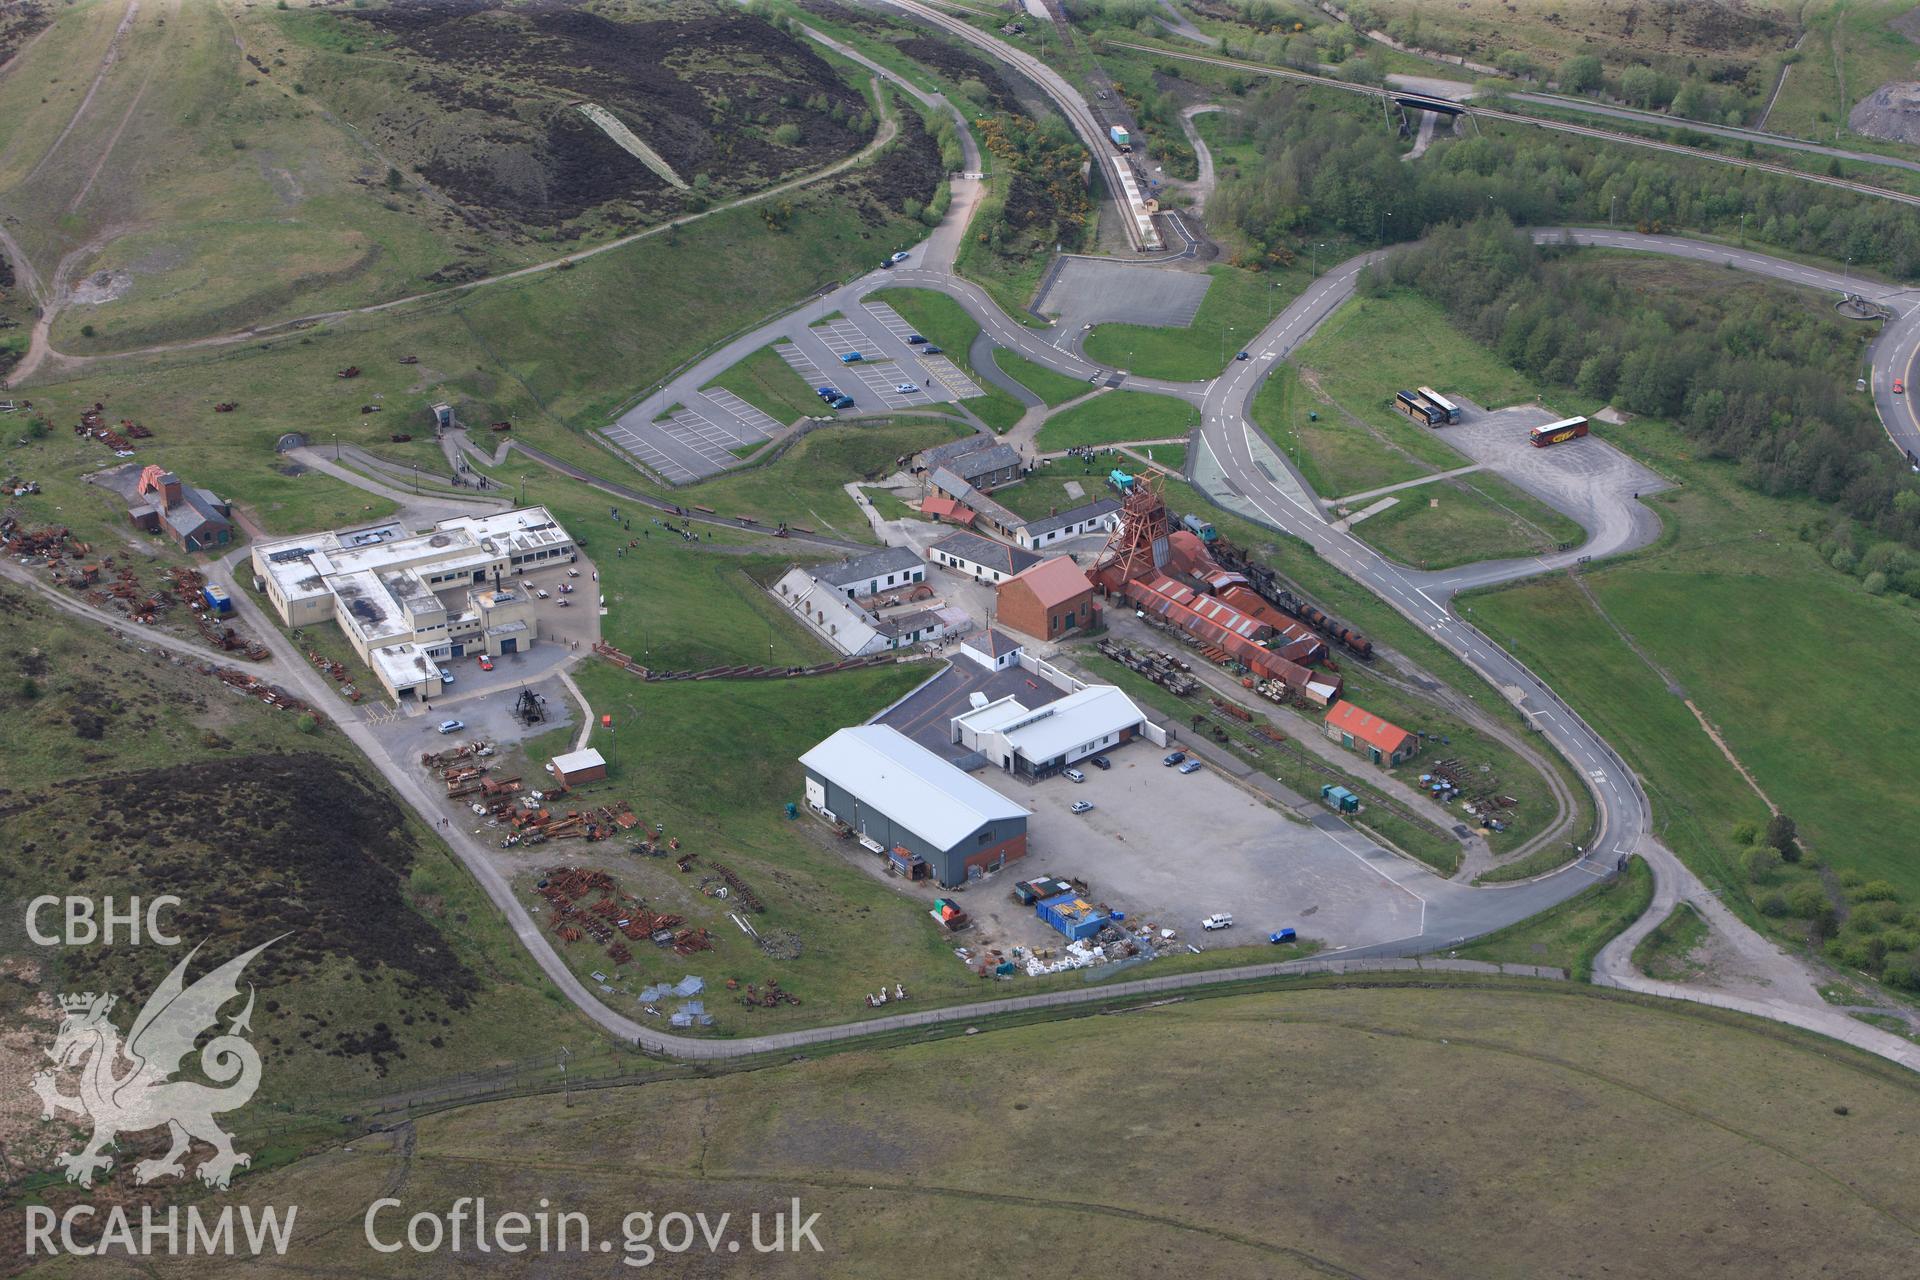 RCAHMW colour oblique photograph of Big Pit Coal Mine. Taken by Toby Driver on 22/05/2012.